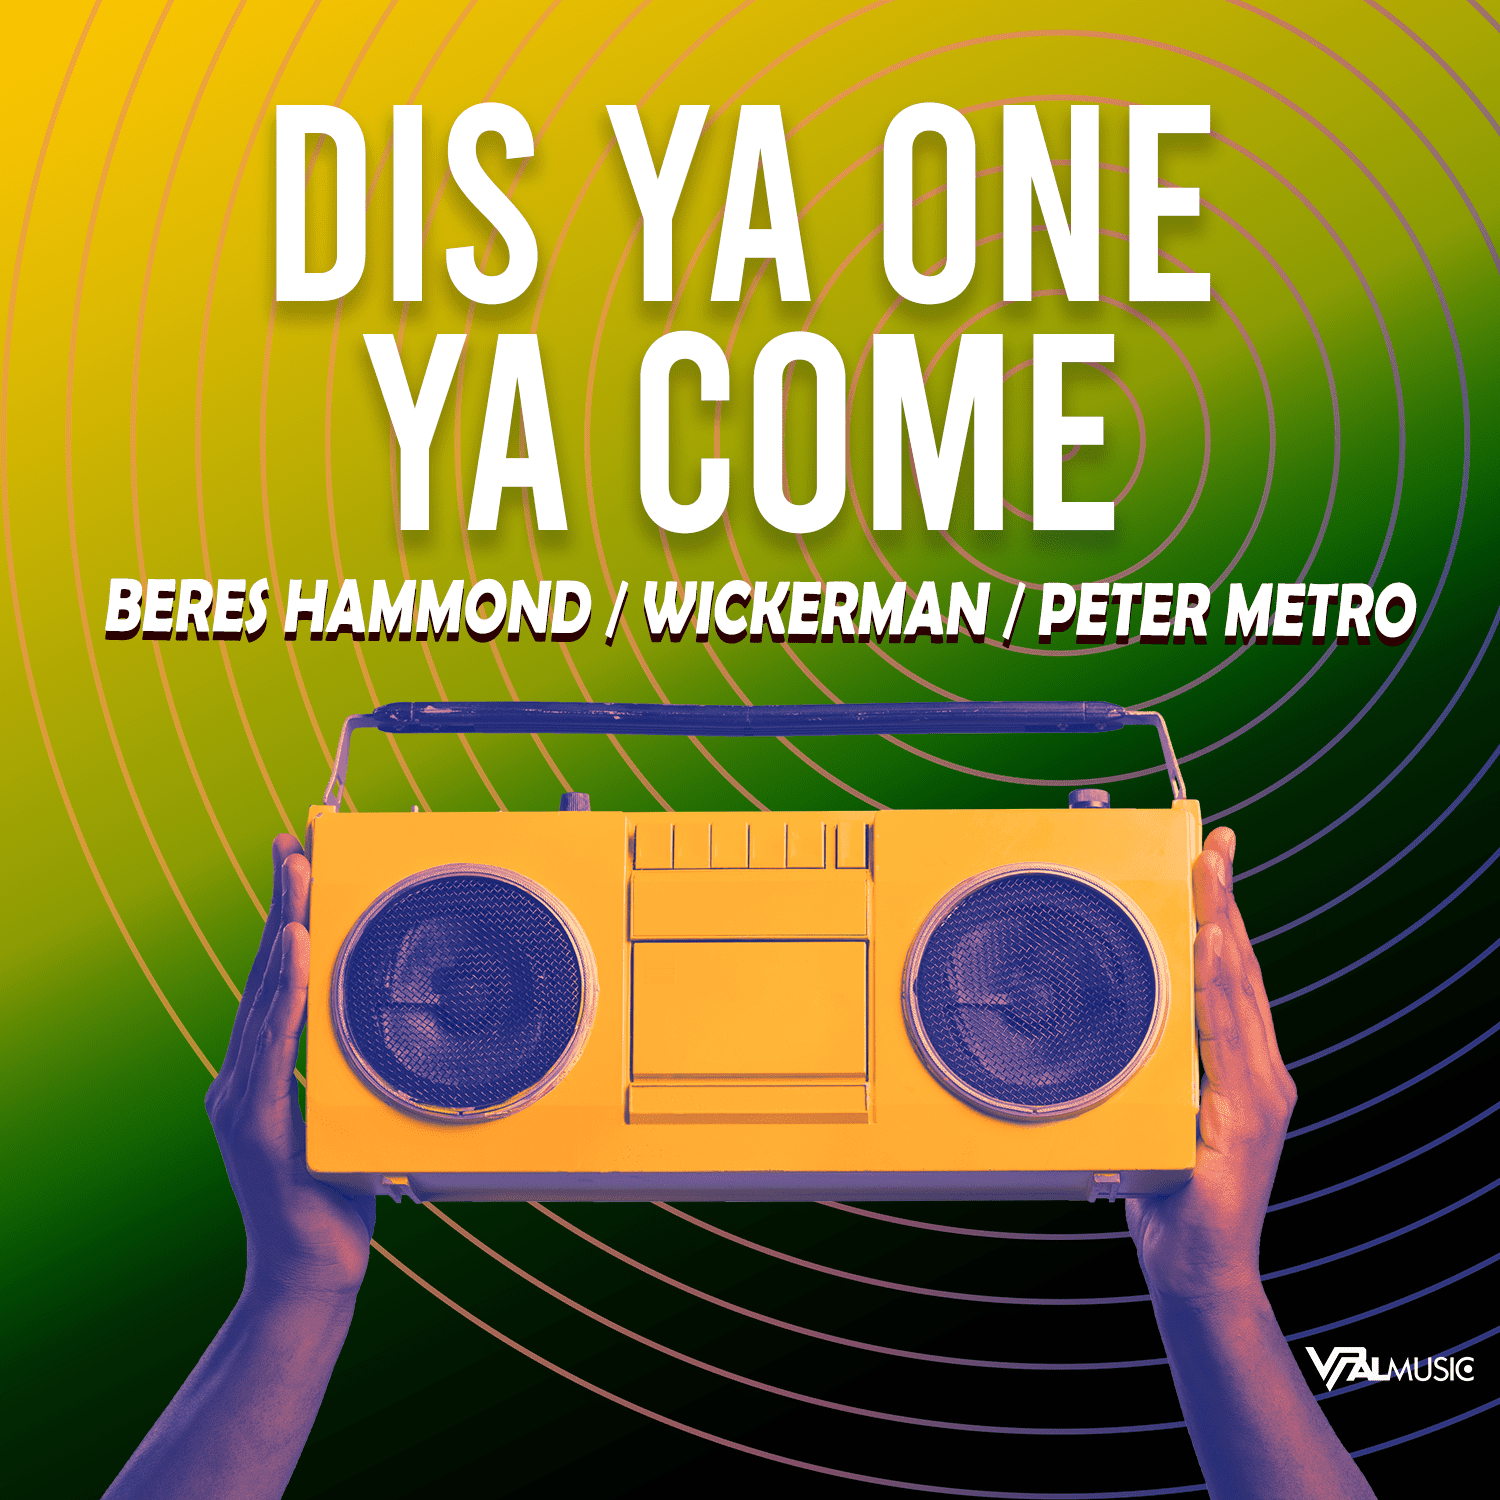 Wicker Man, Peter Metro, Beres Hammond - Dis Ya One Ya Come